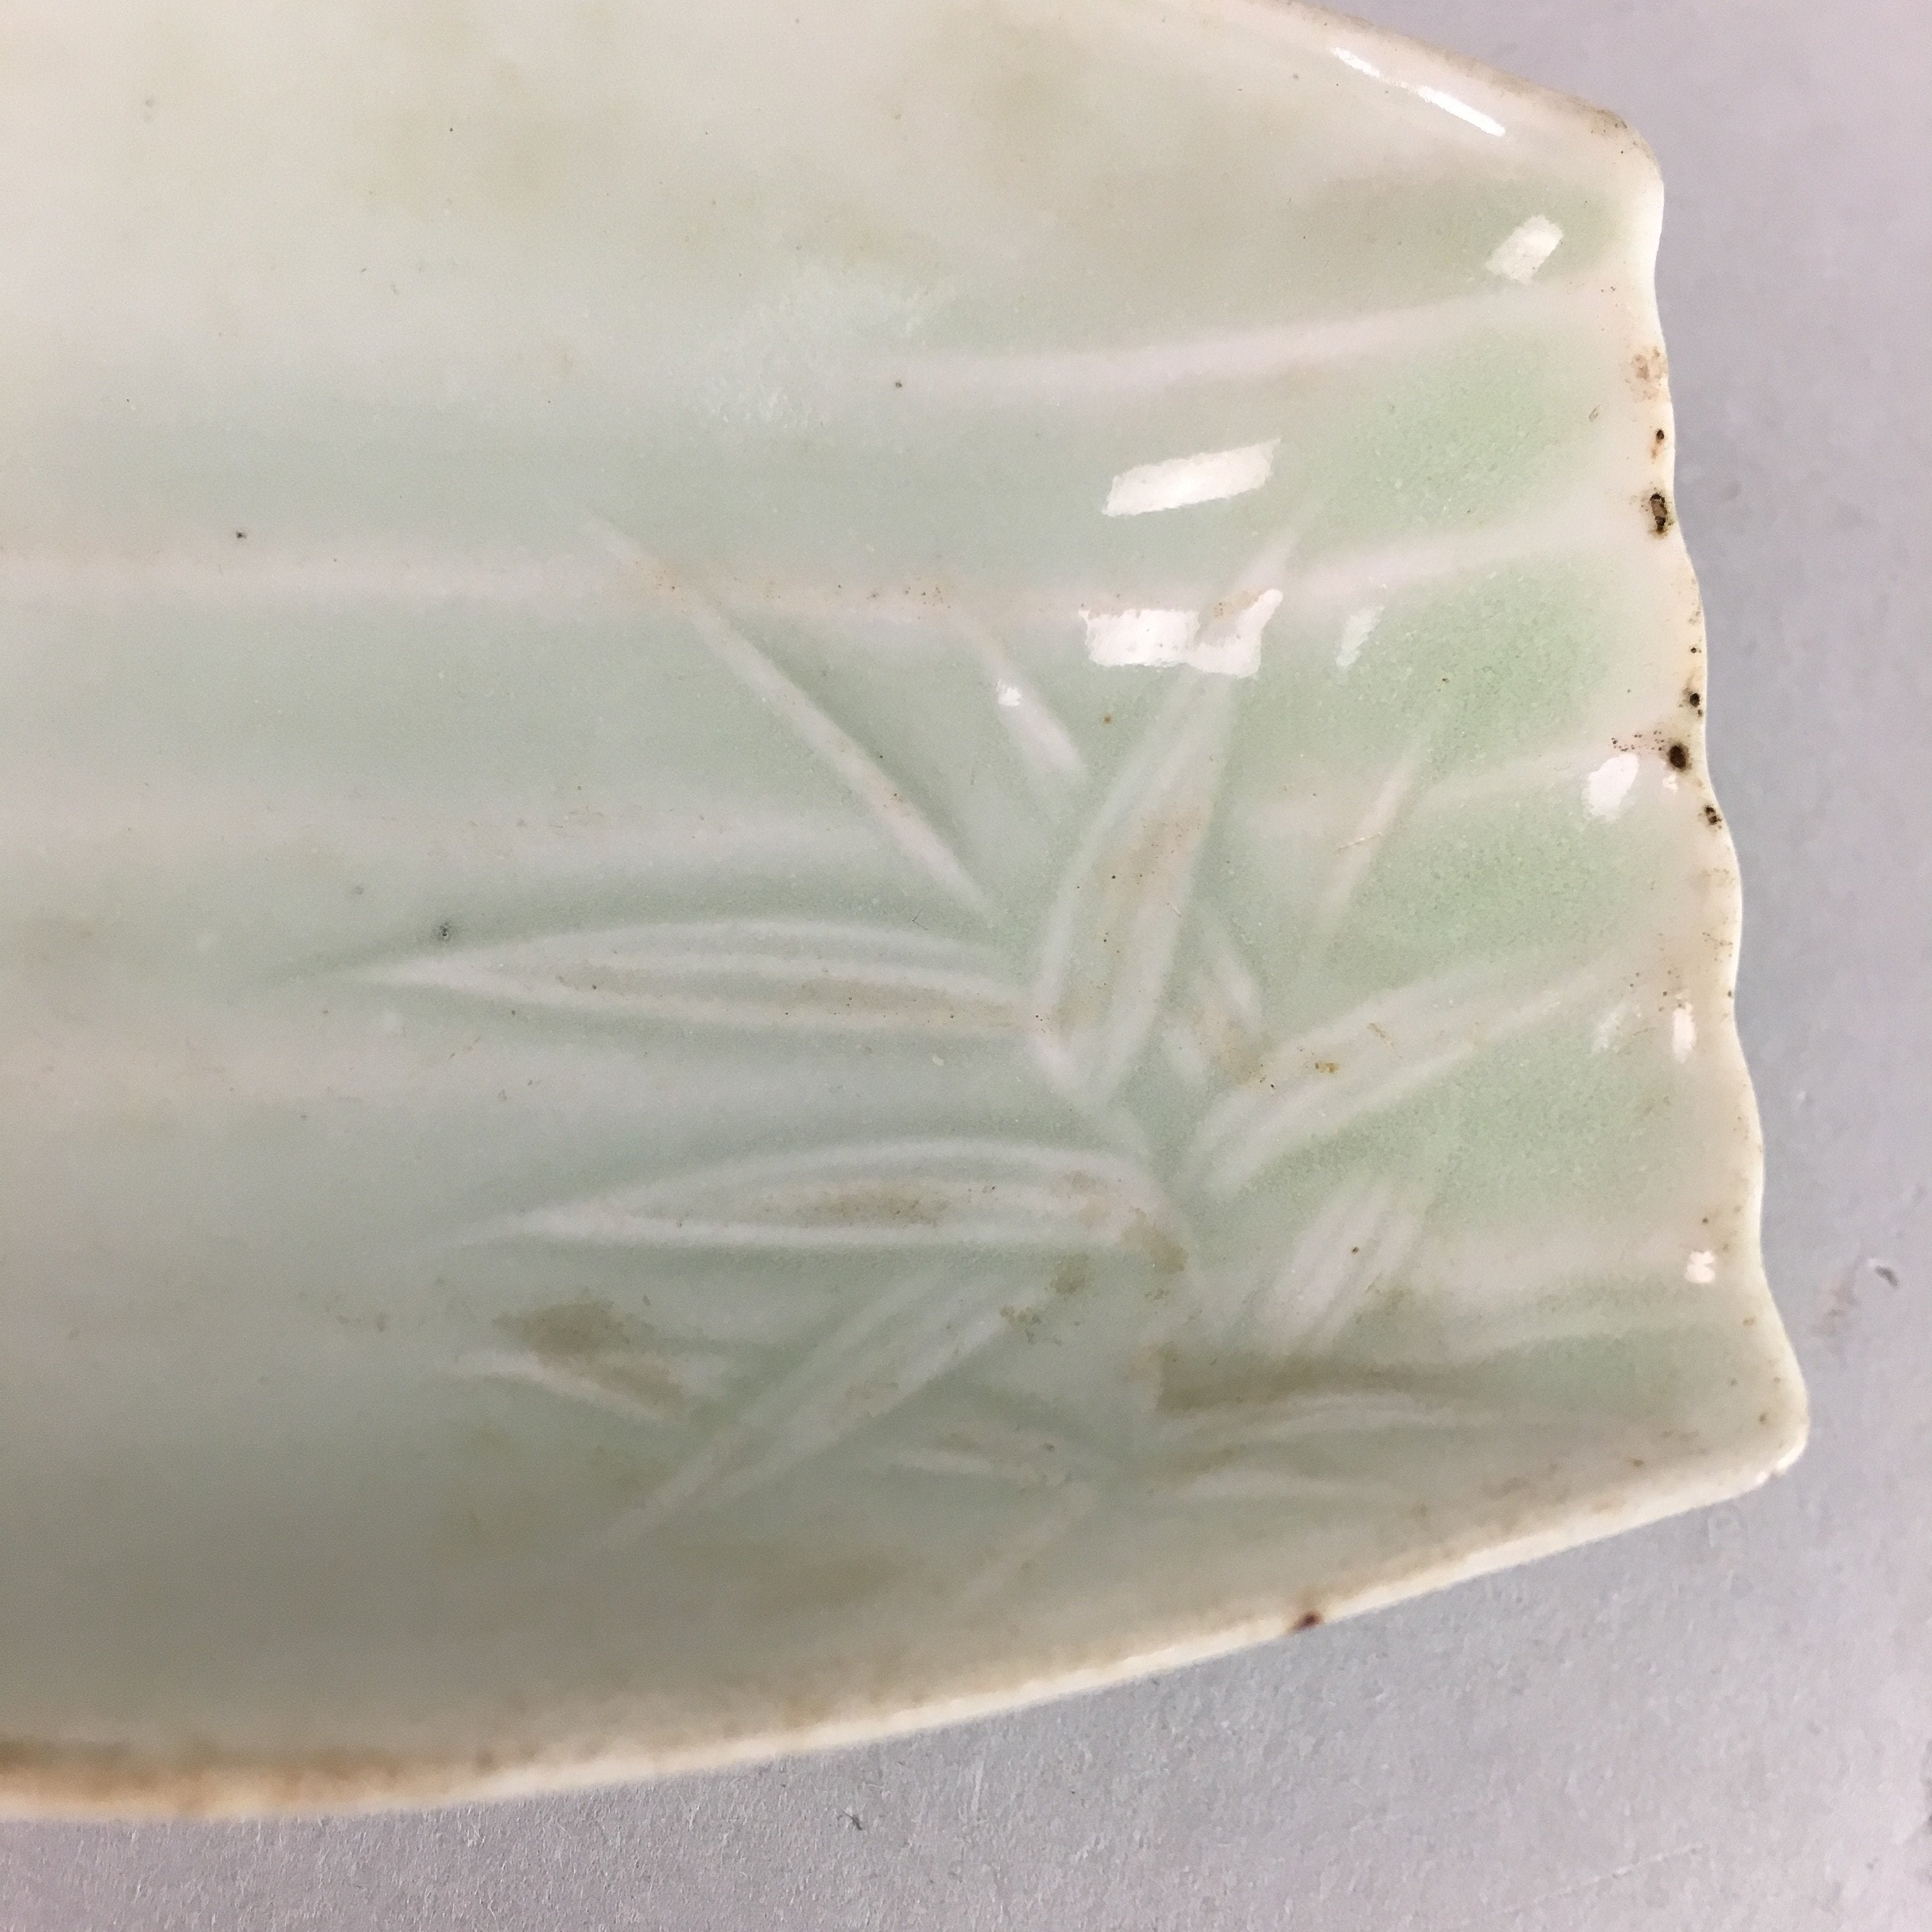 Japanese Celadon Porcelain Small Plate Shallow Bowl Kozara Rectangle Seiji PT926